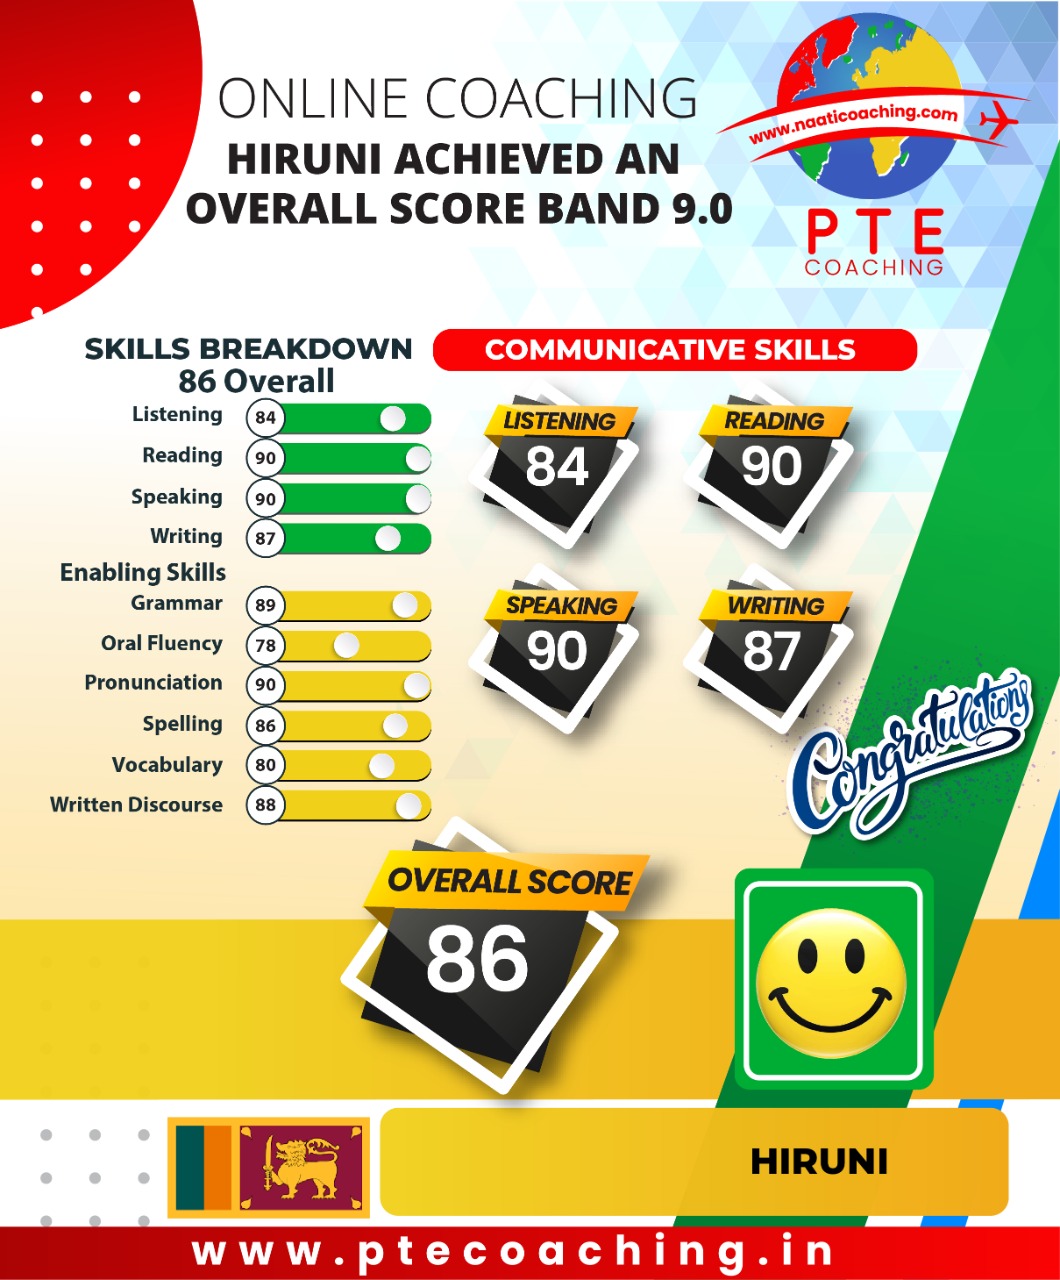 PTE Coaching Scorecard - Hiruni achieved an overall score band 9.0